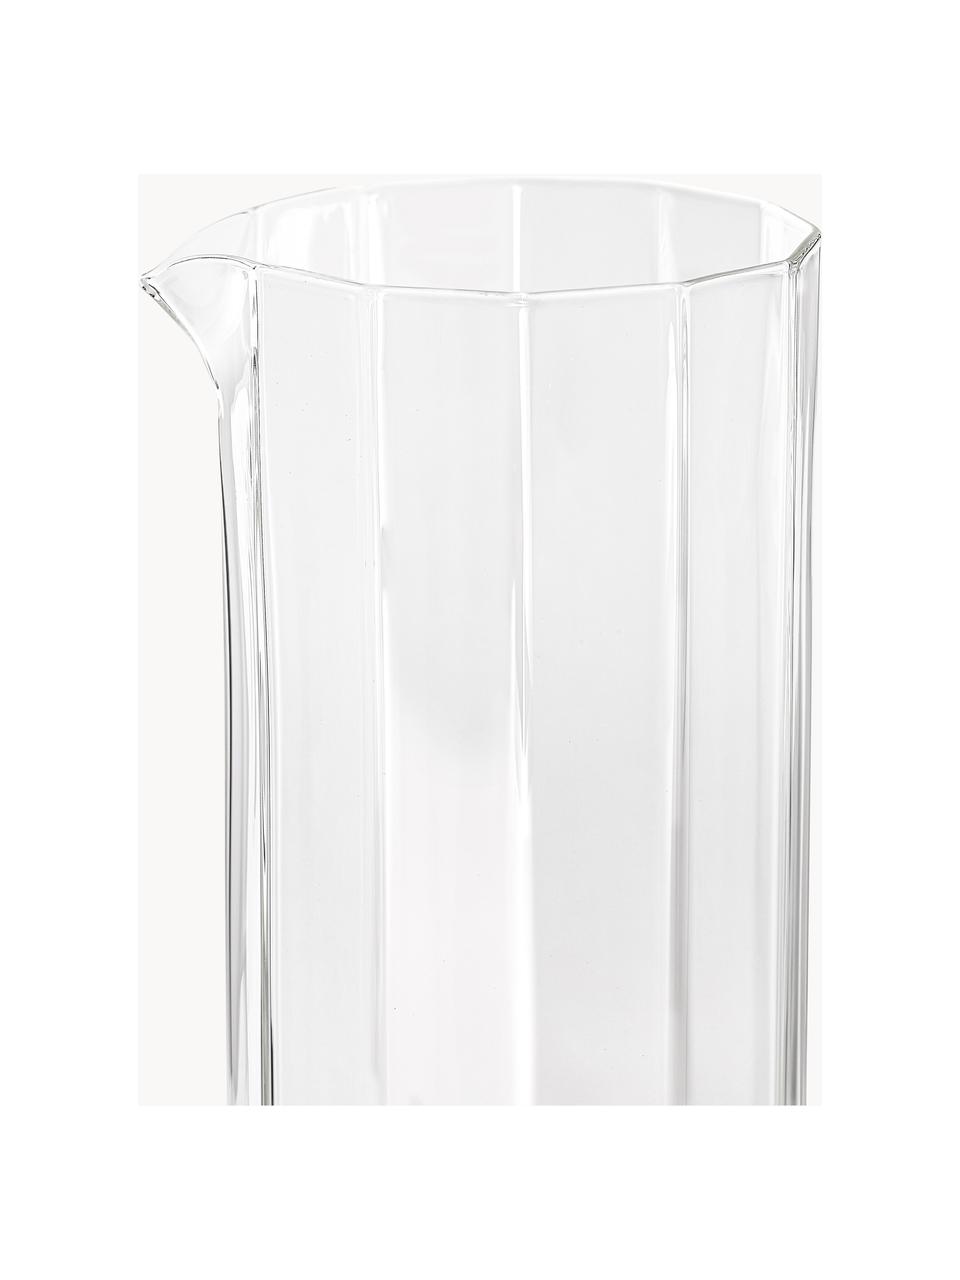 Mondgeblazen waterkaraf Angoli, 1.1 L, Borosilicaatglas, Transparant, 1,1 l